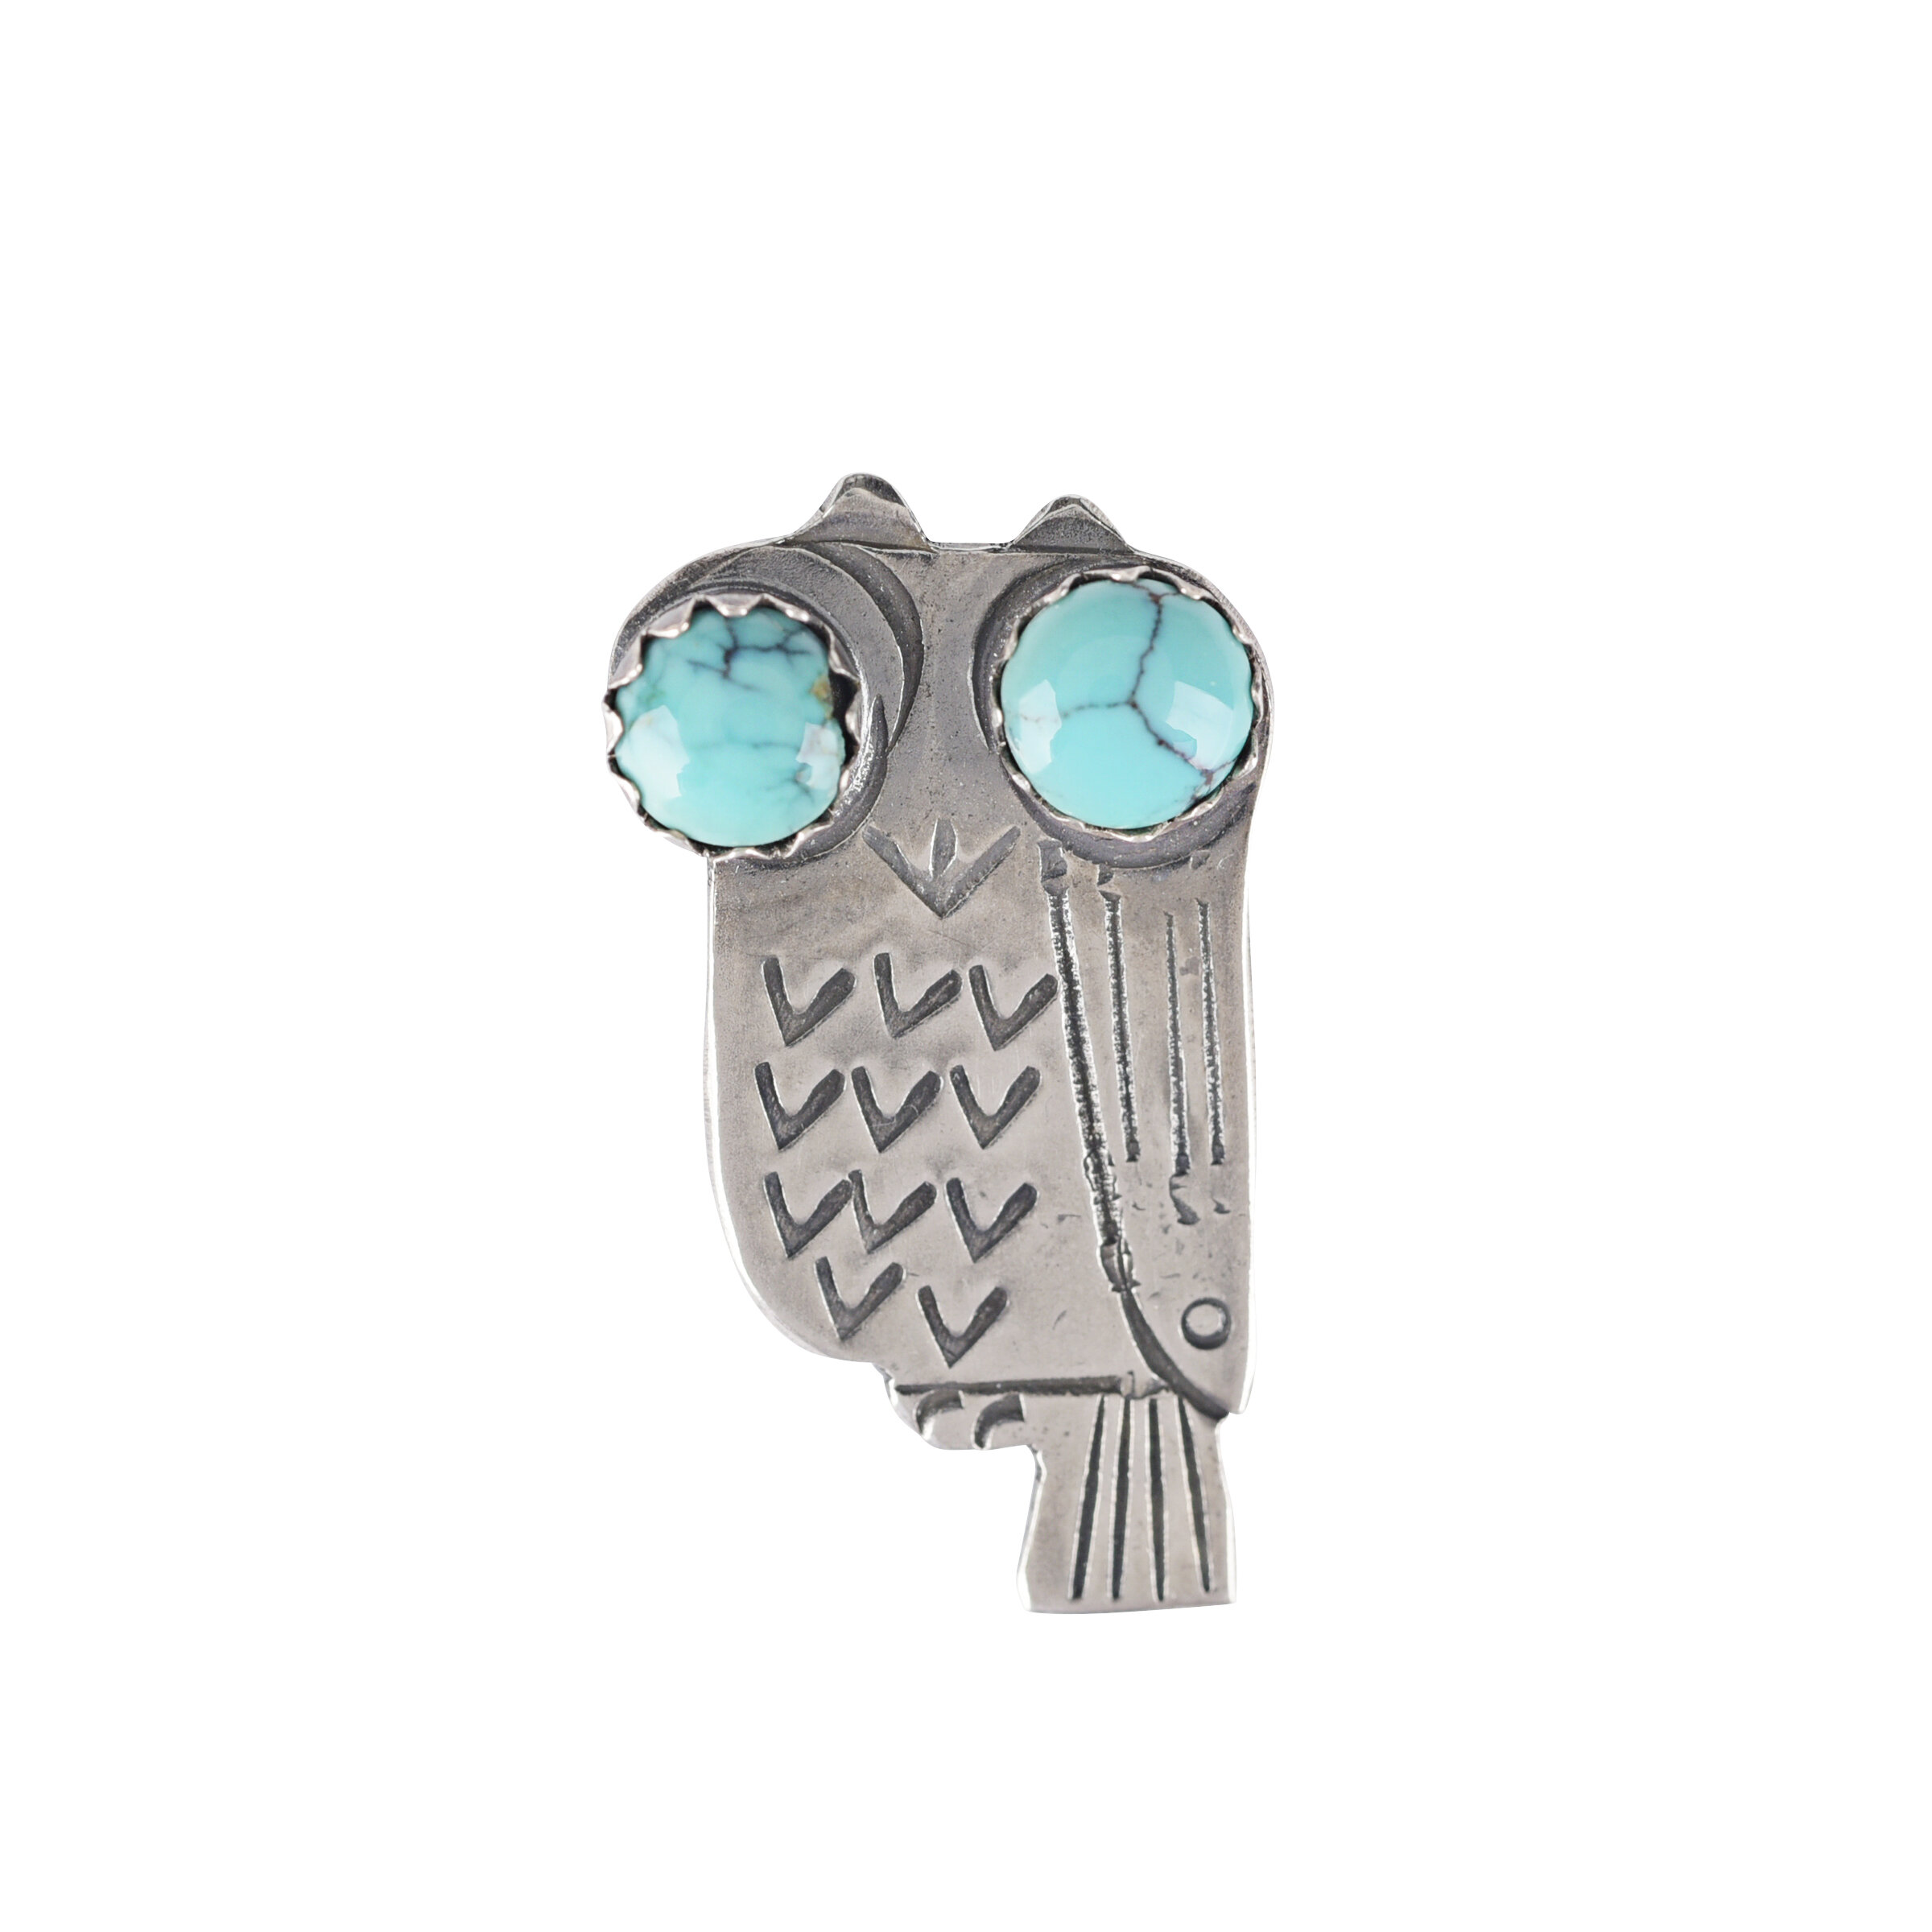 Sterling silver brooch owl solid 925